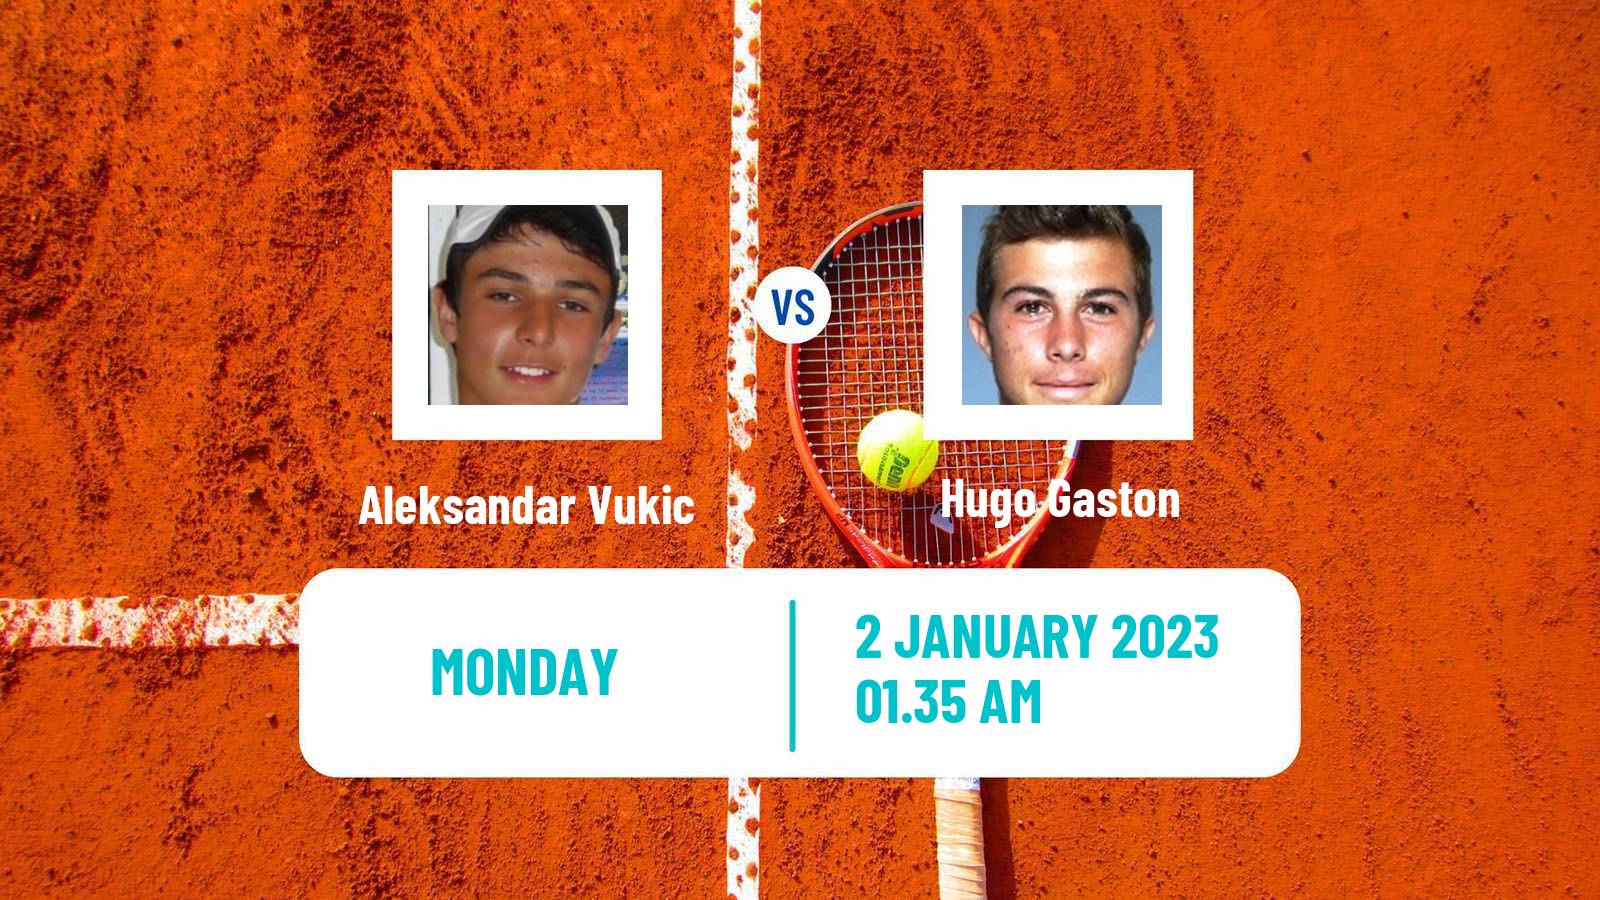 Tennis ATP Challenger Aleksandar Vukic - Hugo Gaston